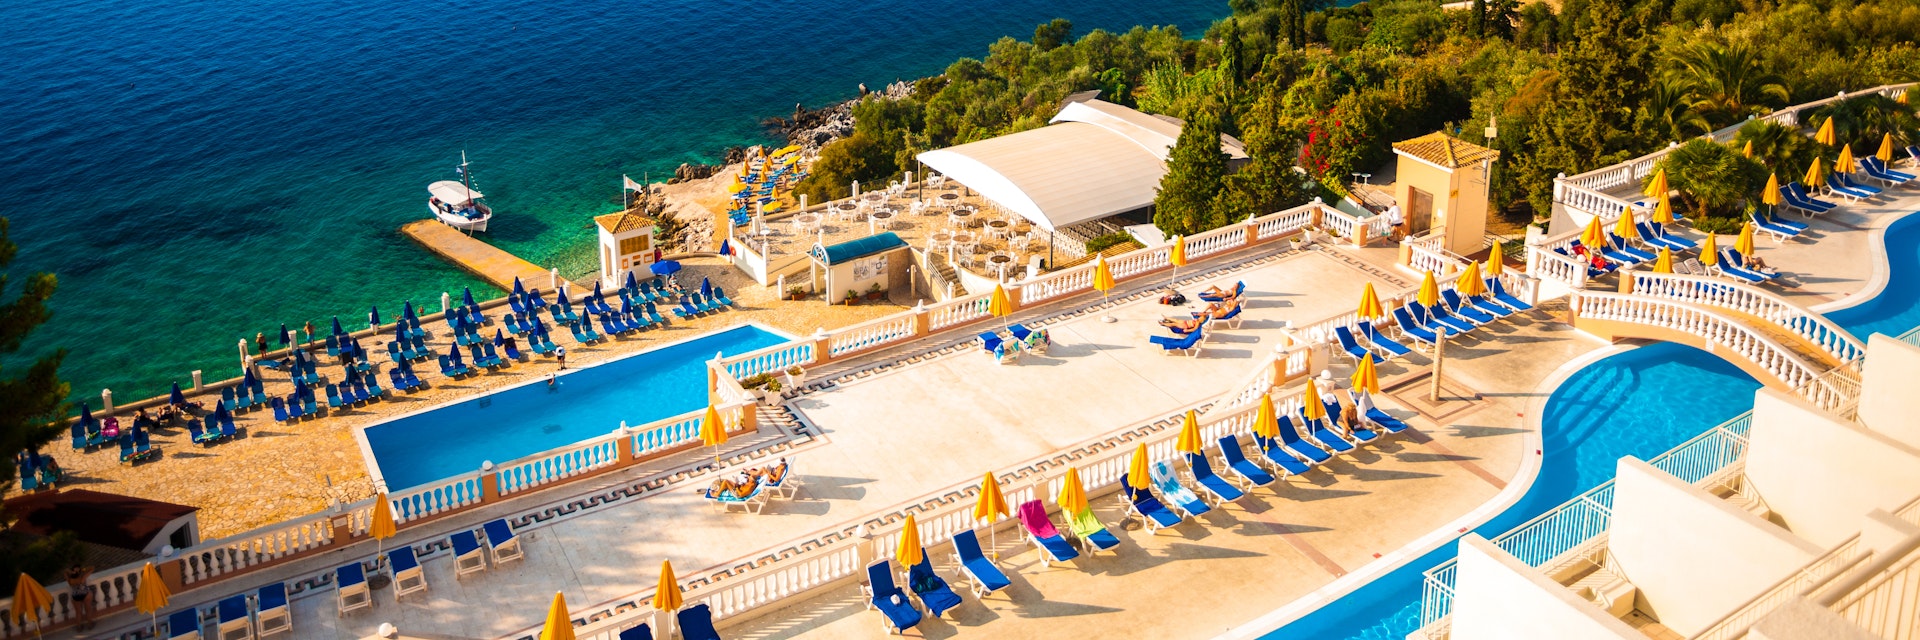 High angle view of luxury hotel and sea, Greece
beach, corfu, greece, holiday, hotel, island, sea, travel